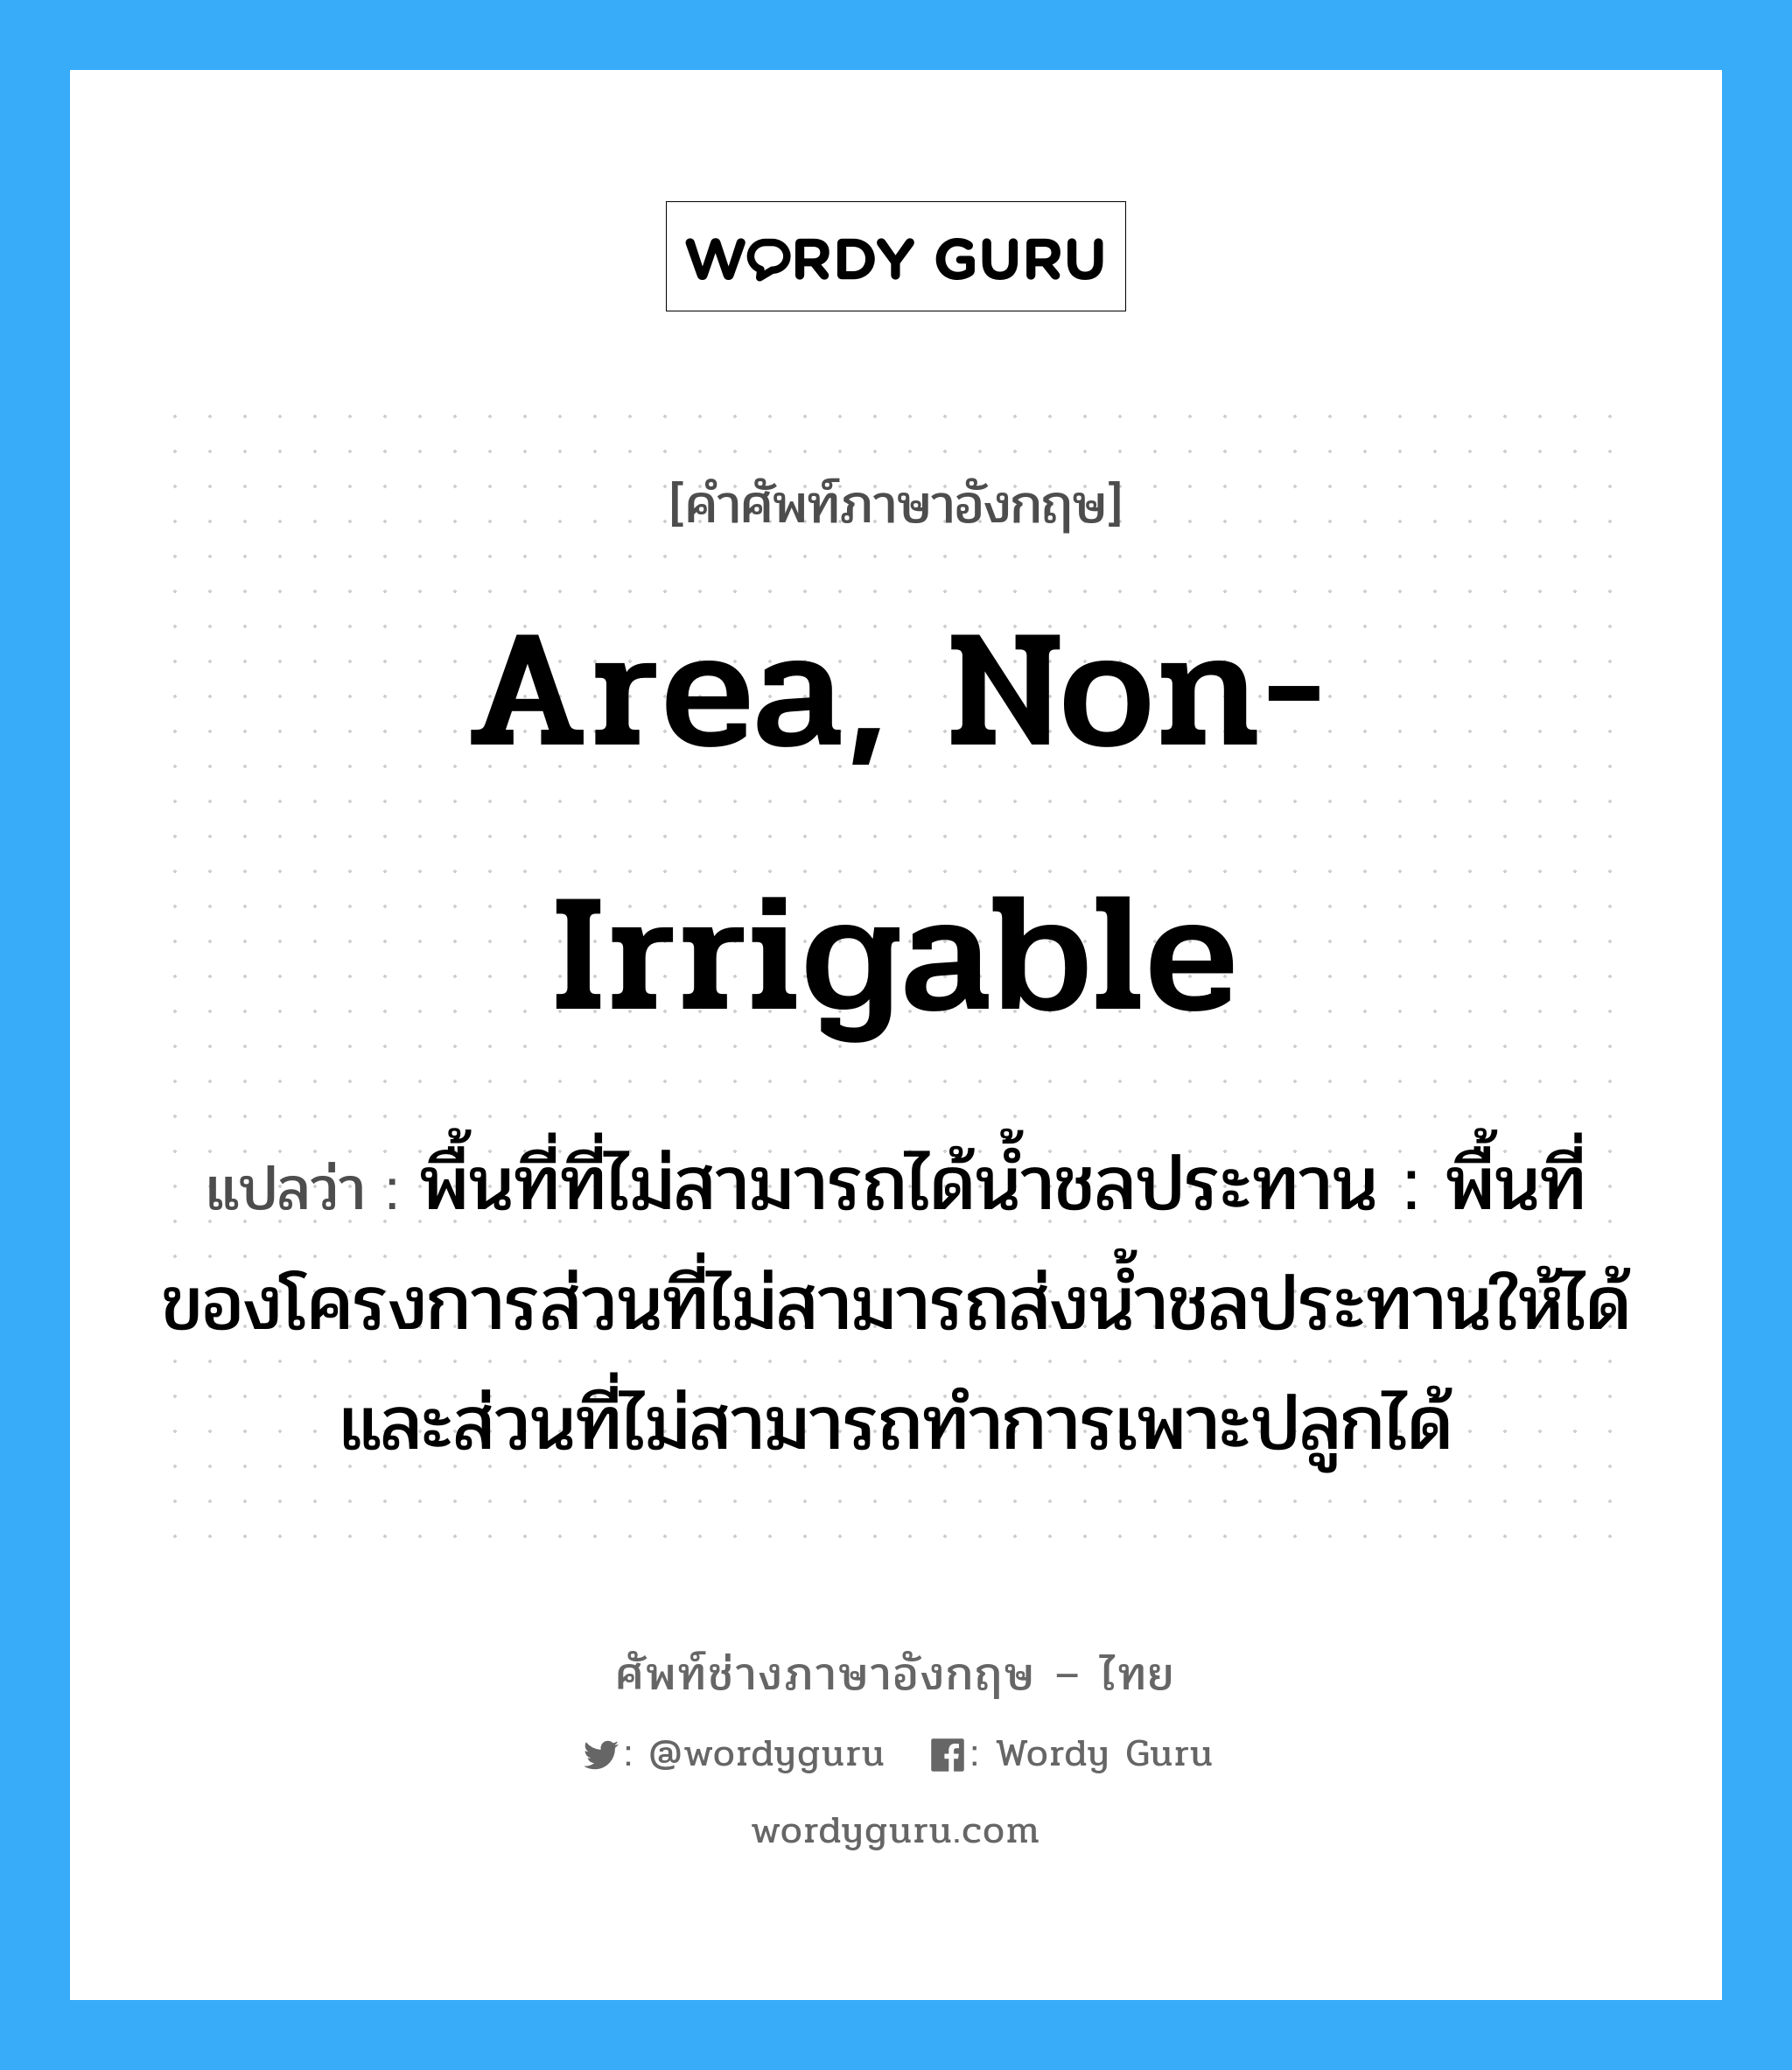 area, non-irrigable แปลว่า?, คำศัพท์ช่างภาษาอังกฤษ - ไทย area, non-irrigable คำศัพท์ภาษาอังกฤษ area, non-irrigable แปลว่า พื้นที่ที่ไม่สามารถได้น้ำชลประทาน : พื้นที่ของโครงการส่วนที่ไม่สามารถส่งน้ำชลประทานให้ได้และส่วนที่ไม่สามารถทำการเพาะปลูกได้